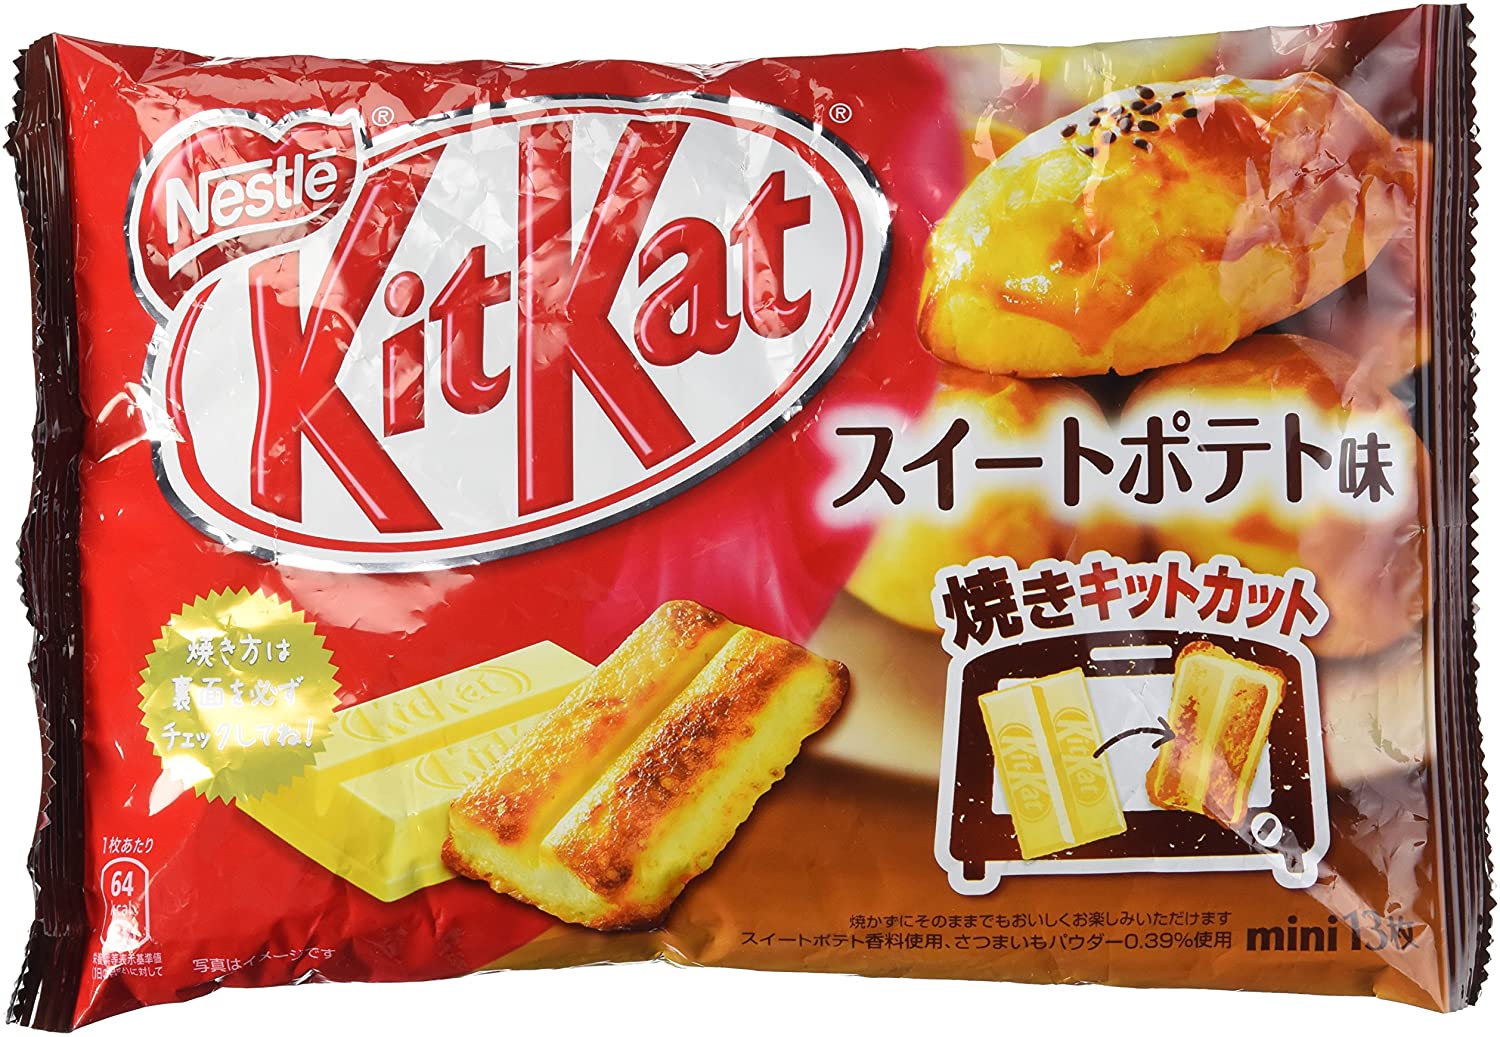 kitkat flavors